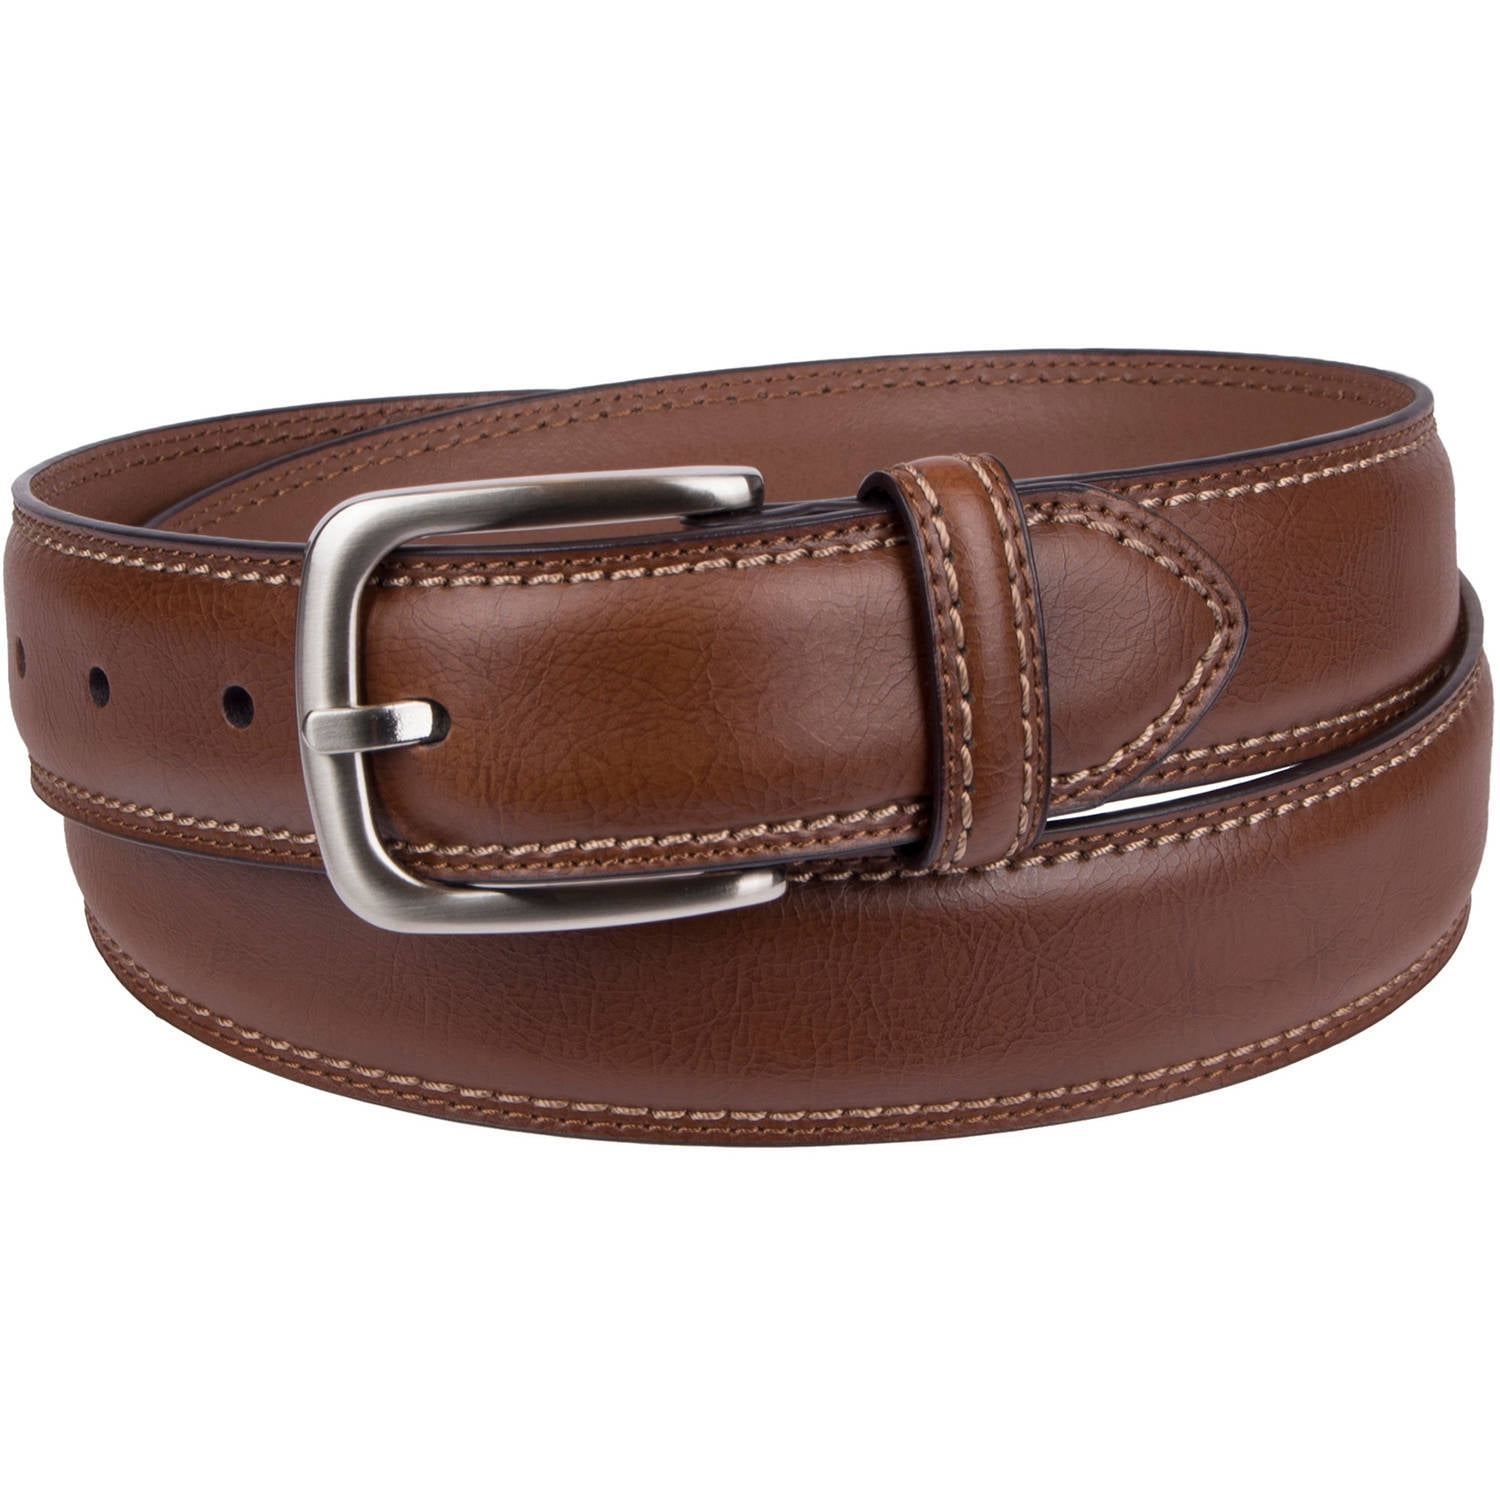 Genuine Dickie's Men's Leather Belt with Contrast Stitch - Walmart.com